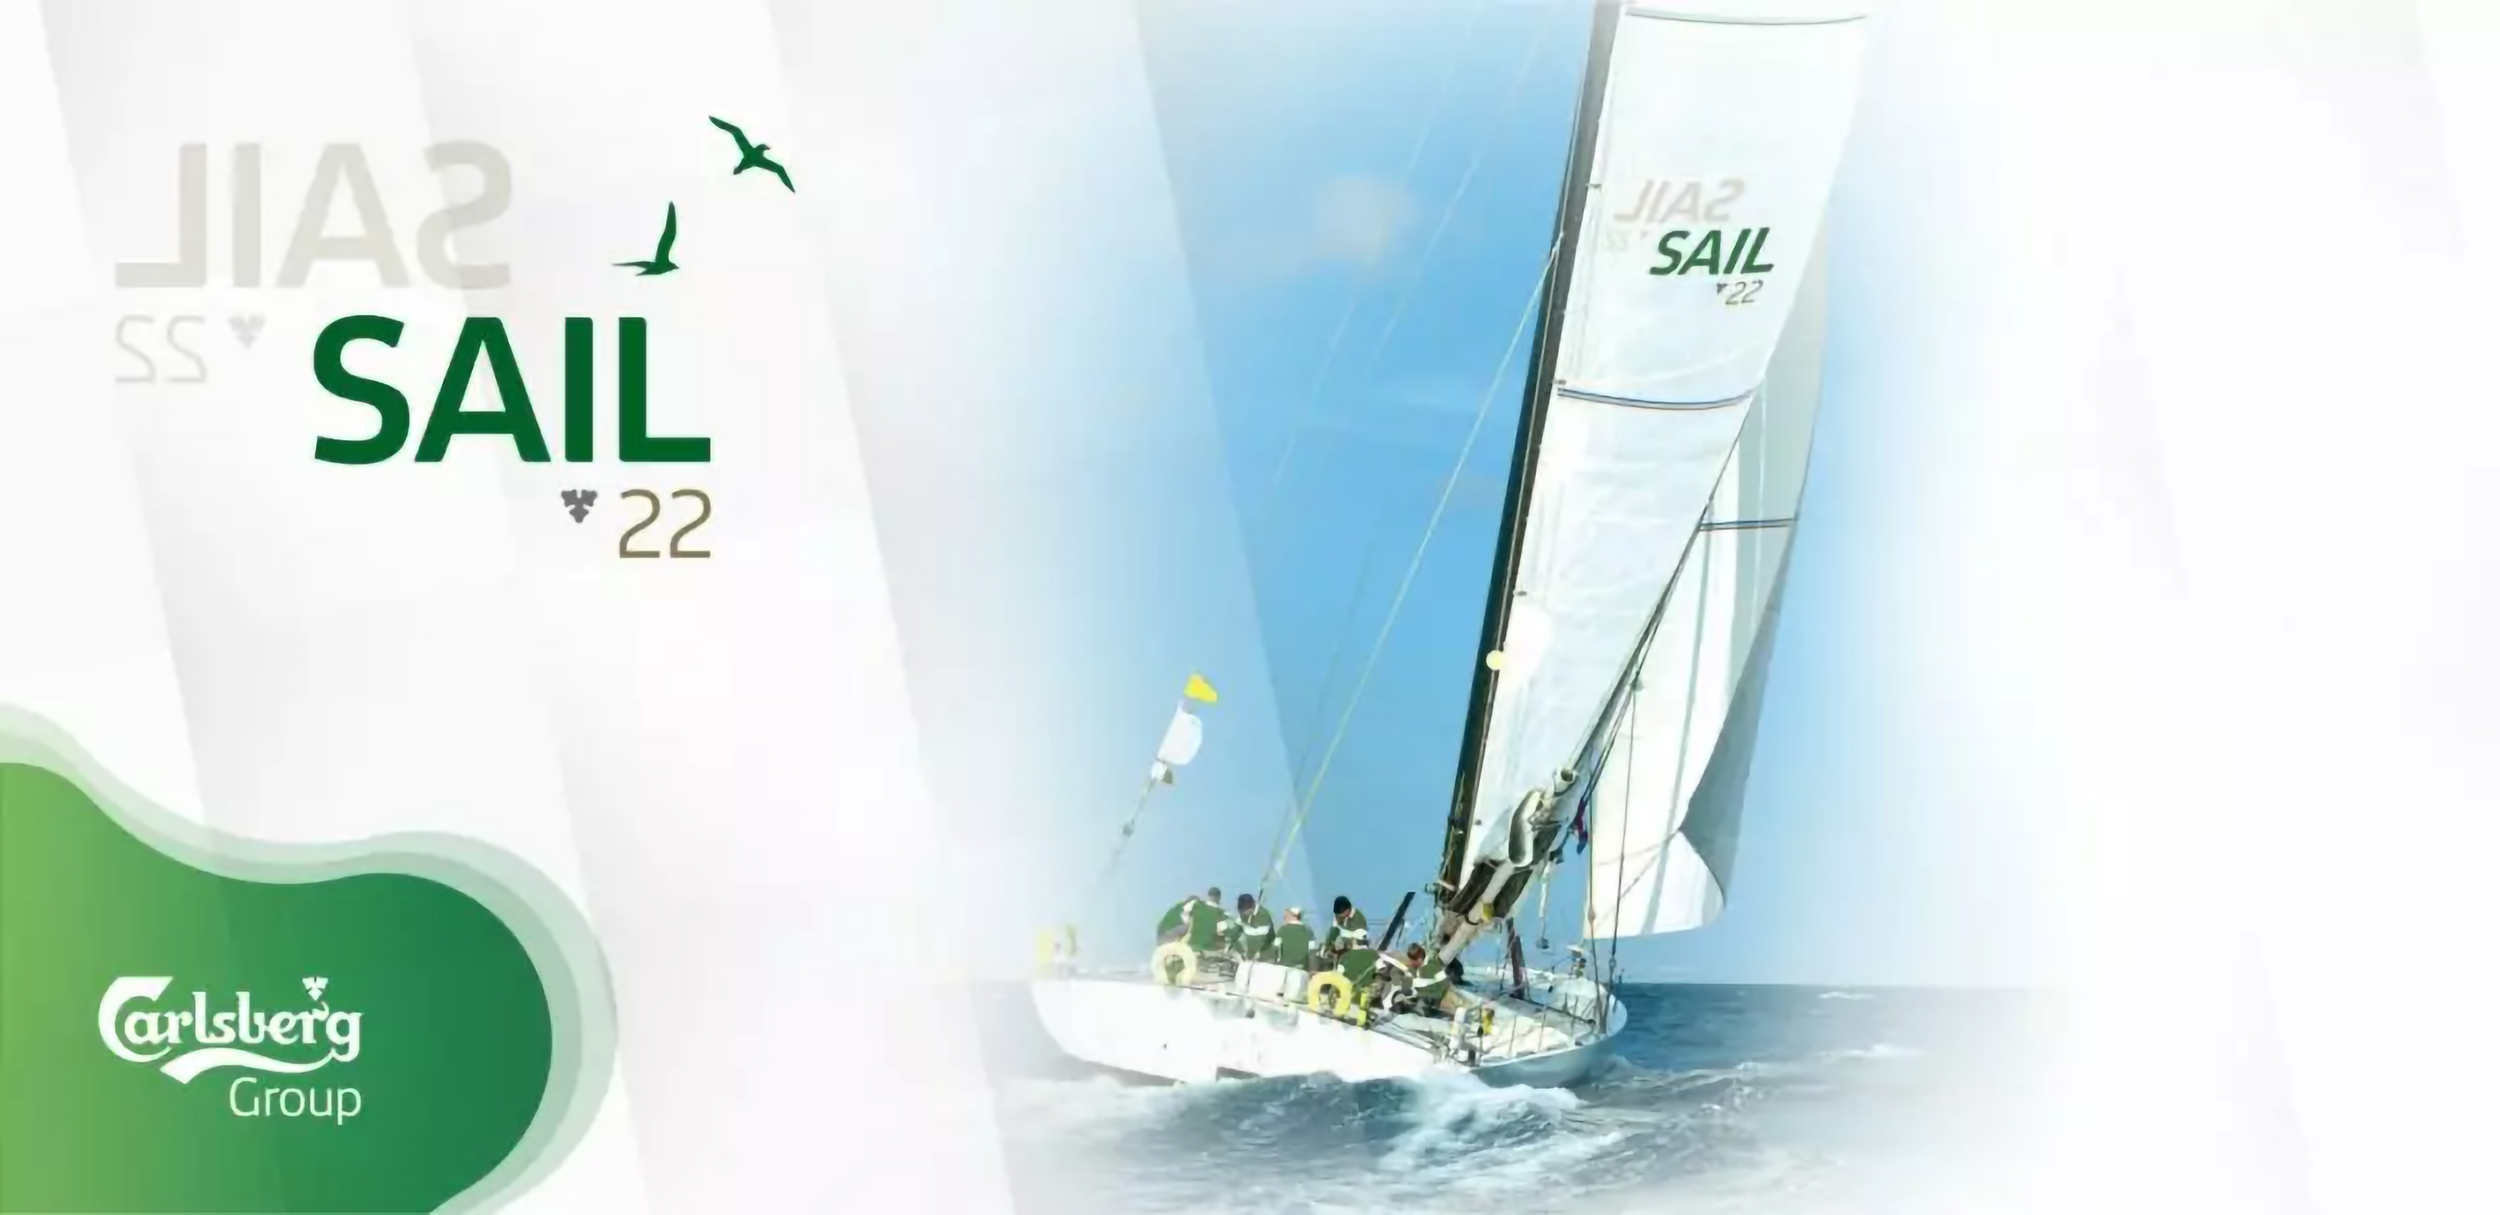 Carlsberg Gruppe - Sail '22, Globale Strategie